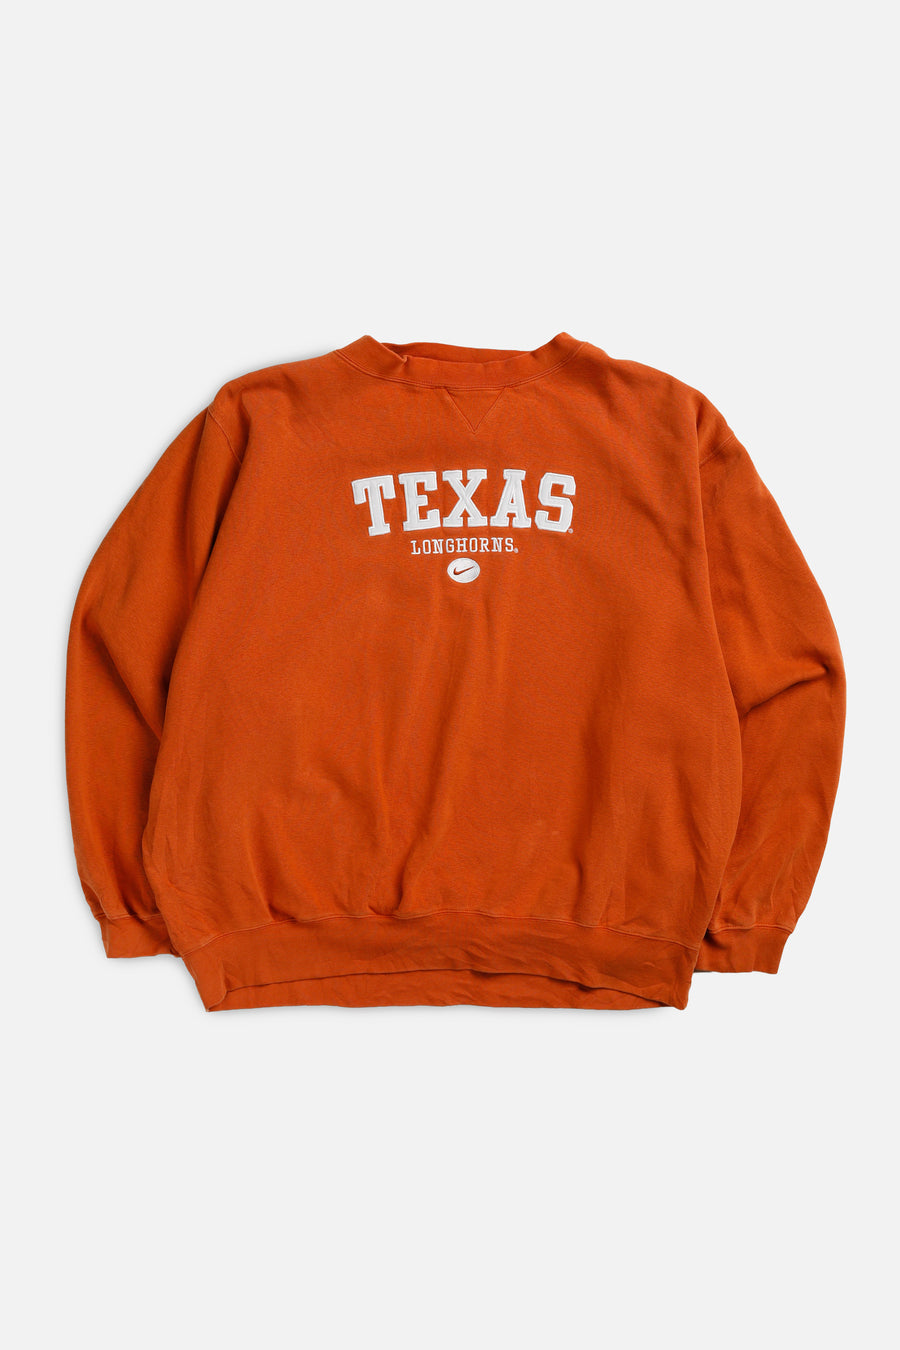 Vintage Texas Longhorns Sweatshirt - XXL